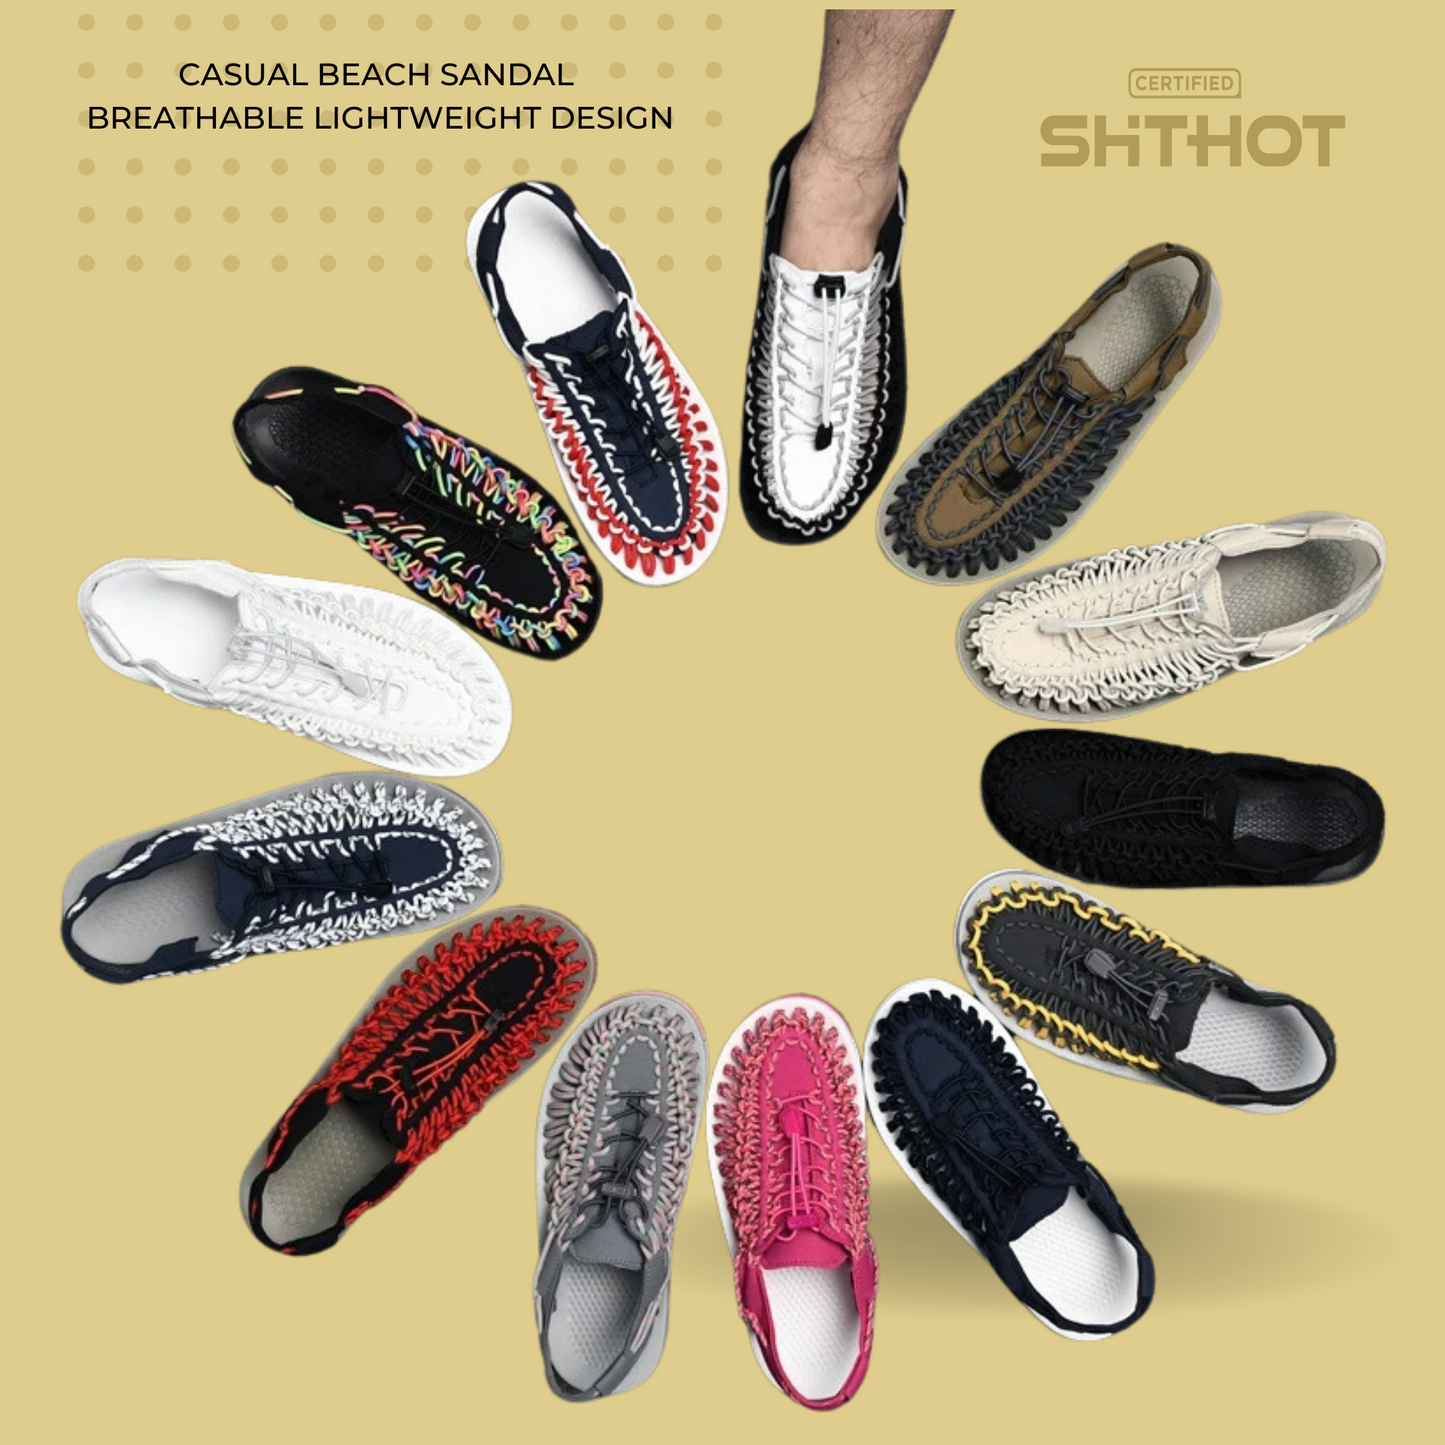 Certified ShitHot Handmade Sandals - Range